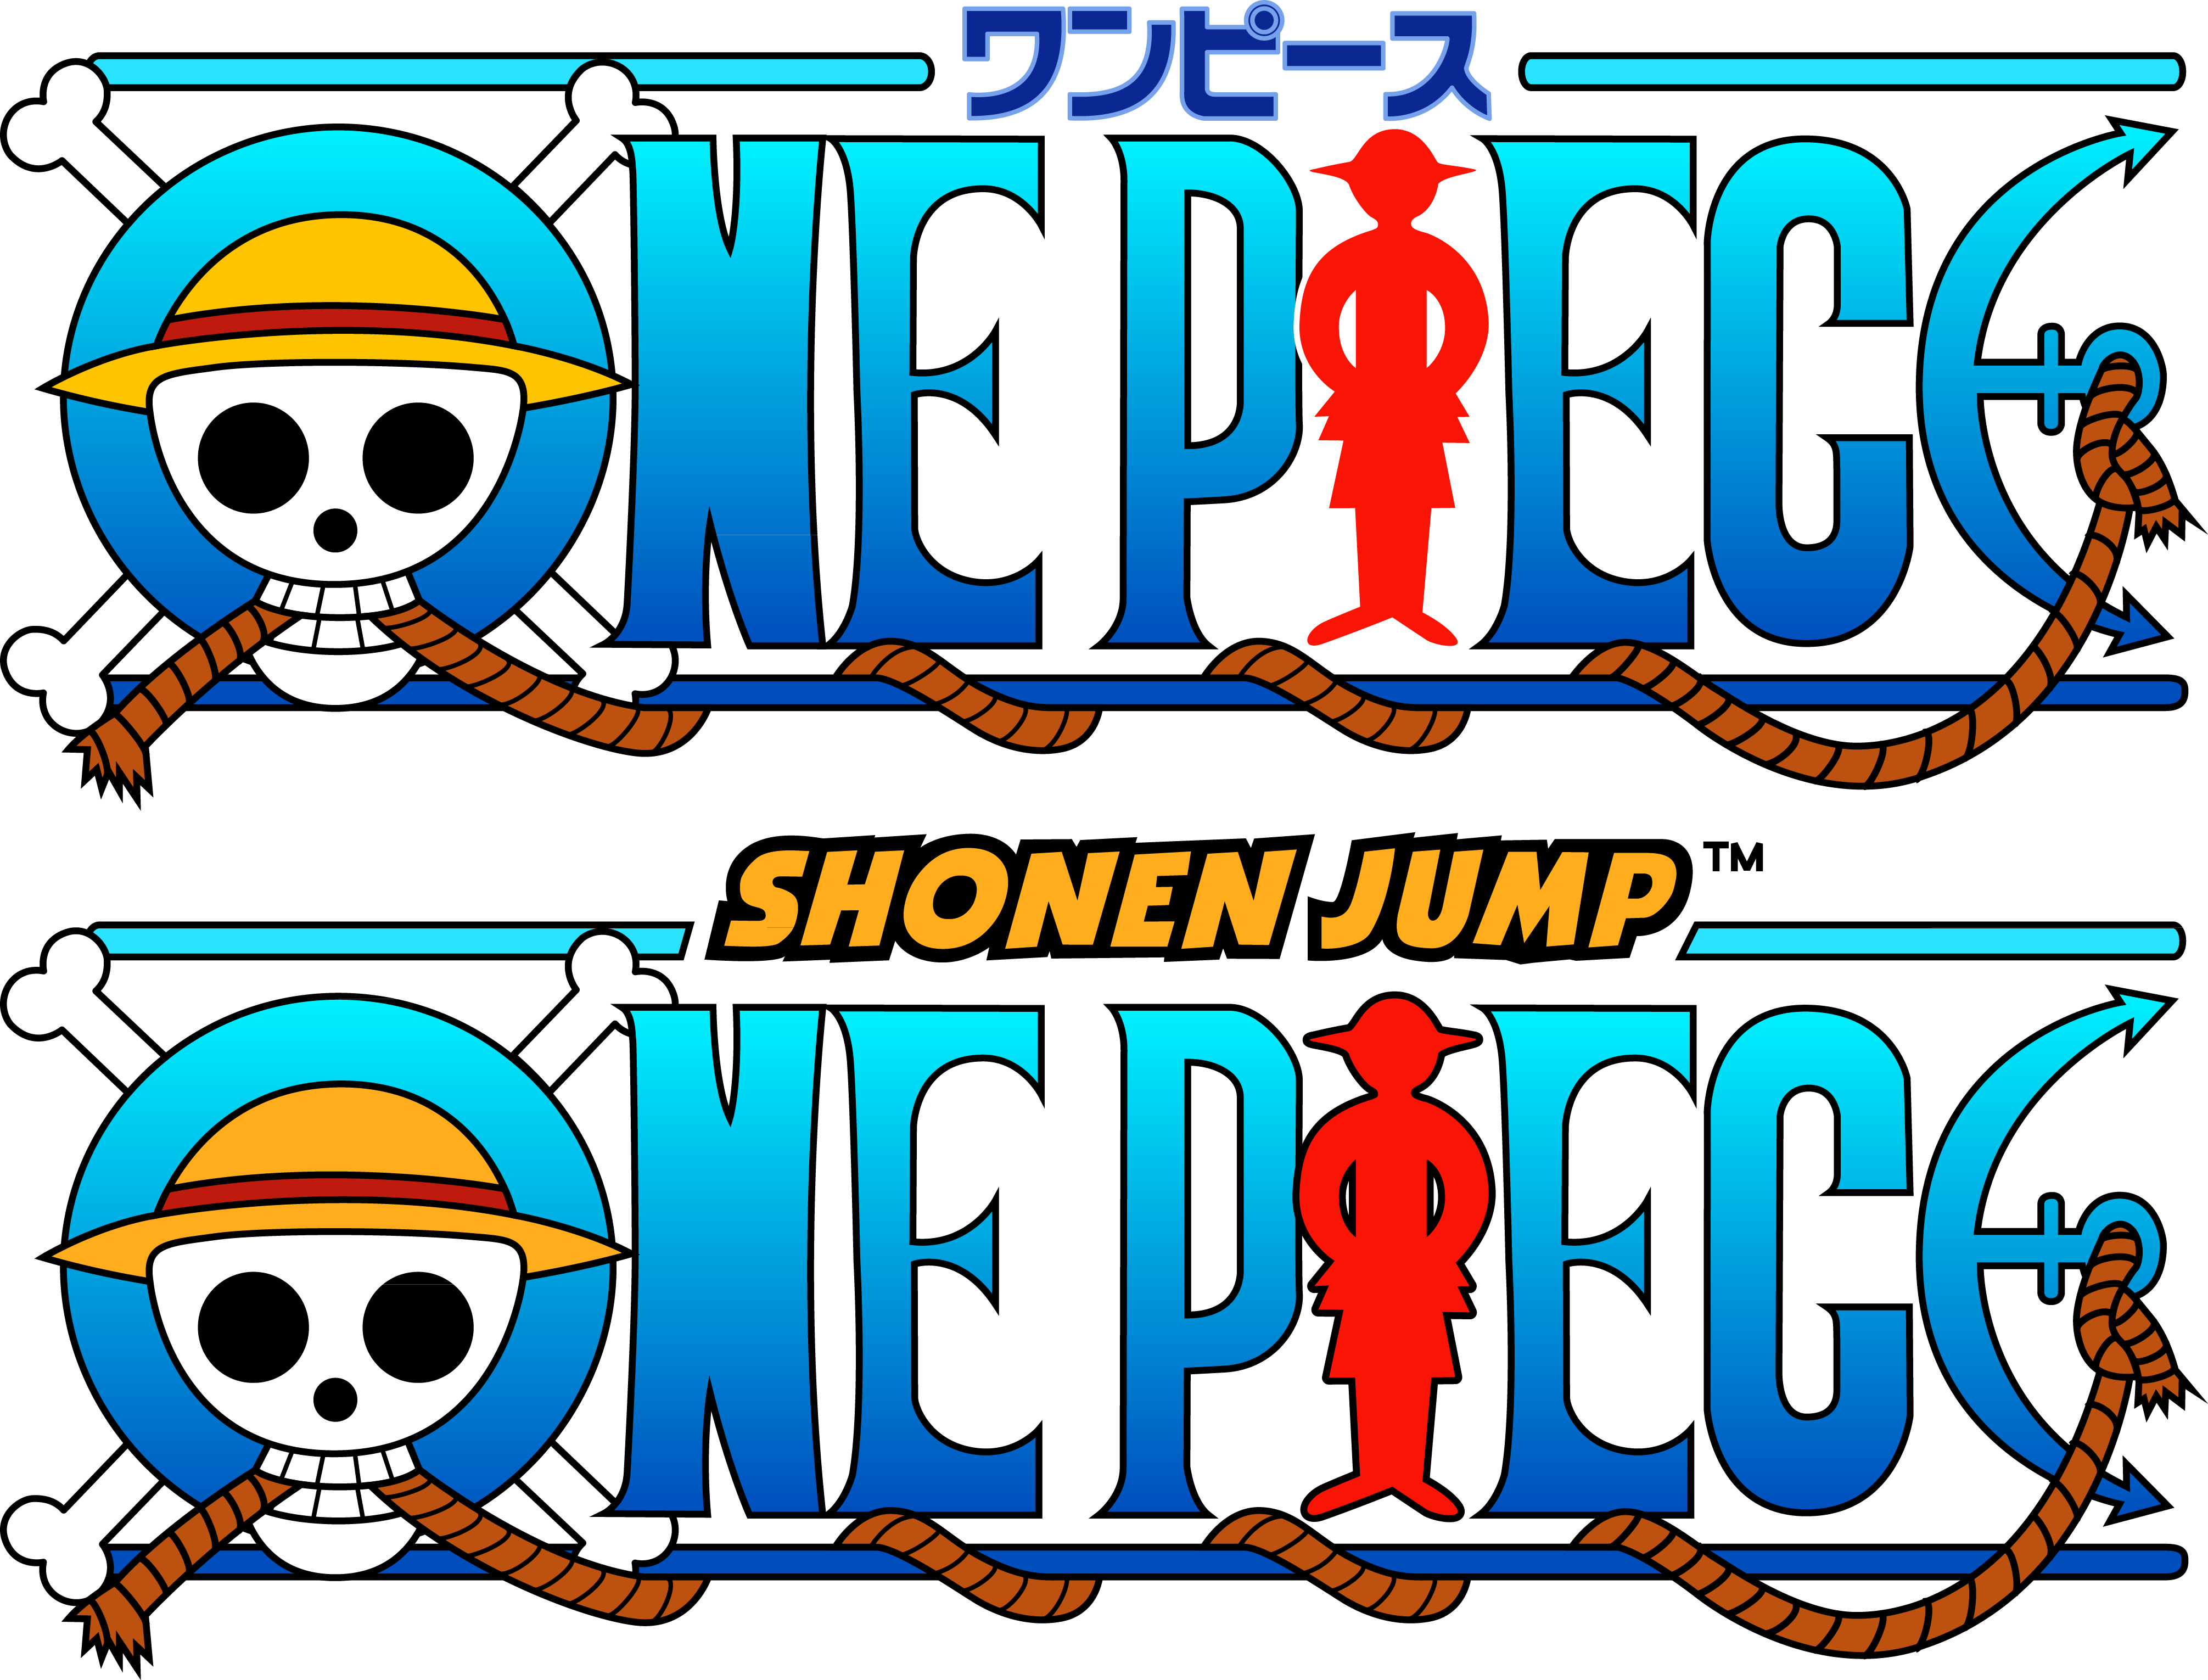 I made One Piece logo in desmos : r/OnePiece